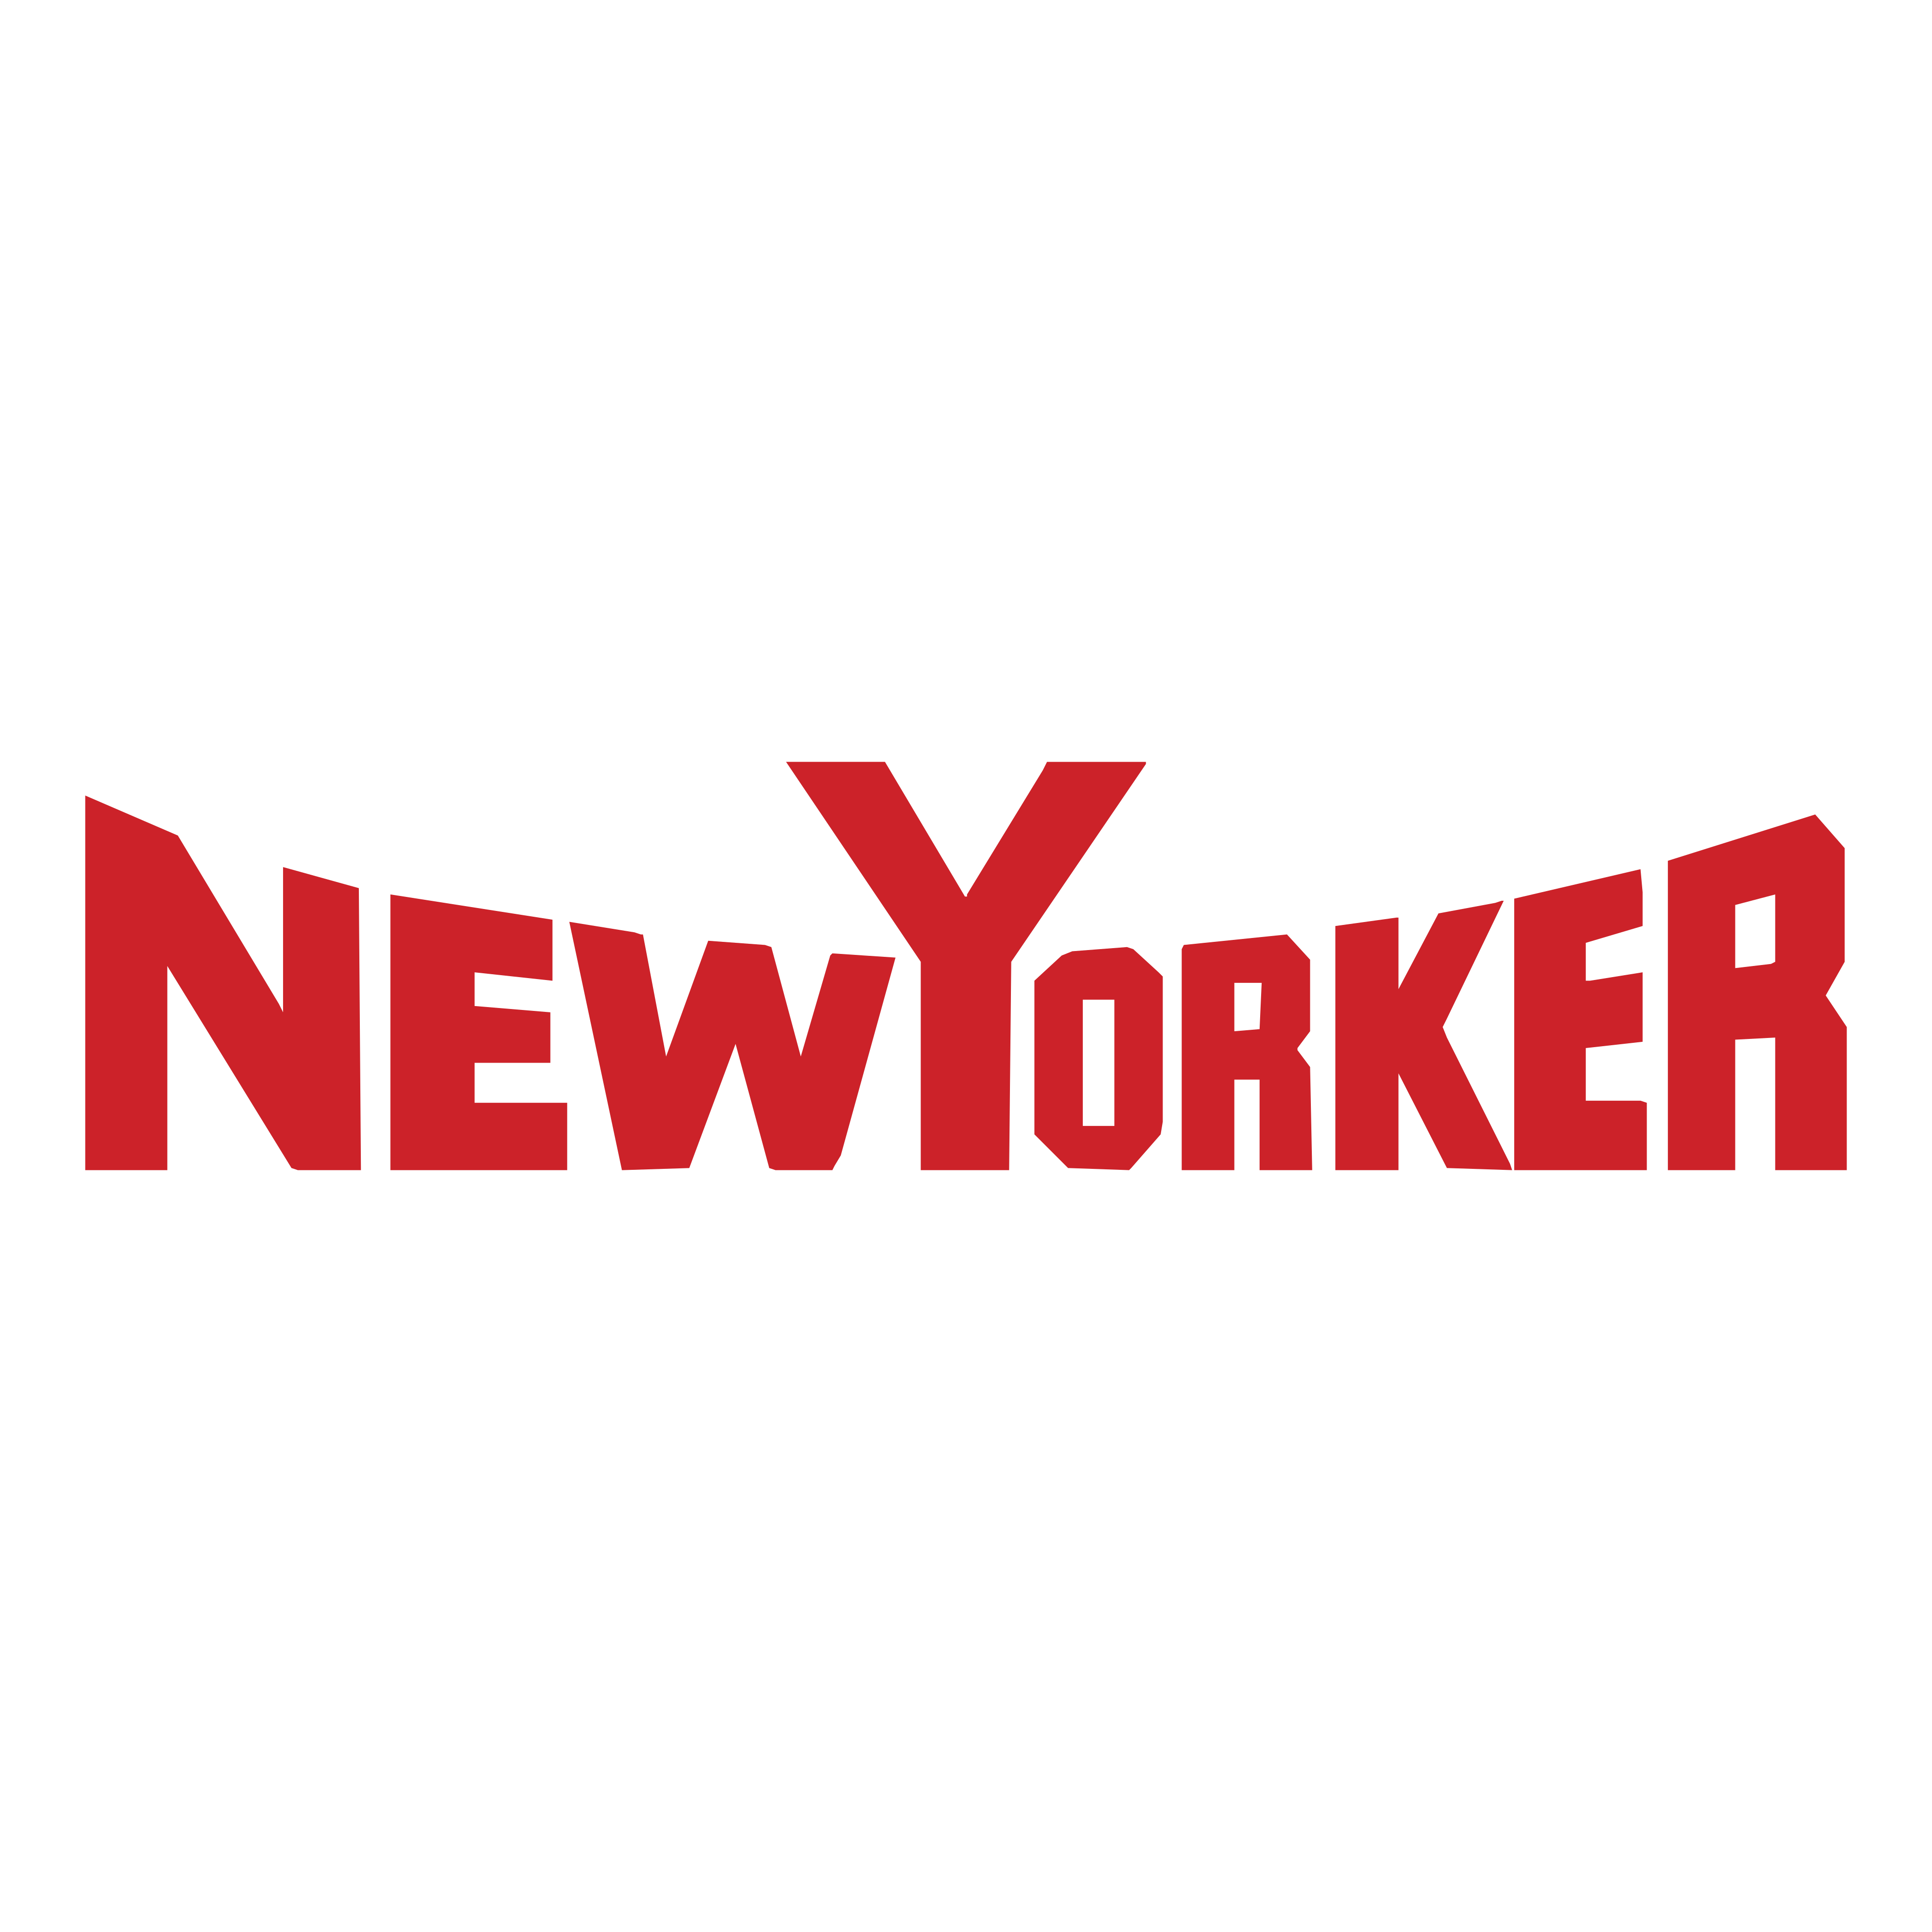 Newyorker ru интернет магазин. Нью йоркер. Логотип магазина Нью-Йоркера. Бренд New Yorker. Магазин New Yorker логотип.